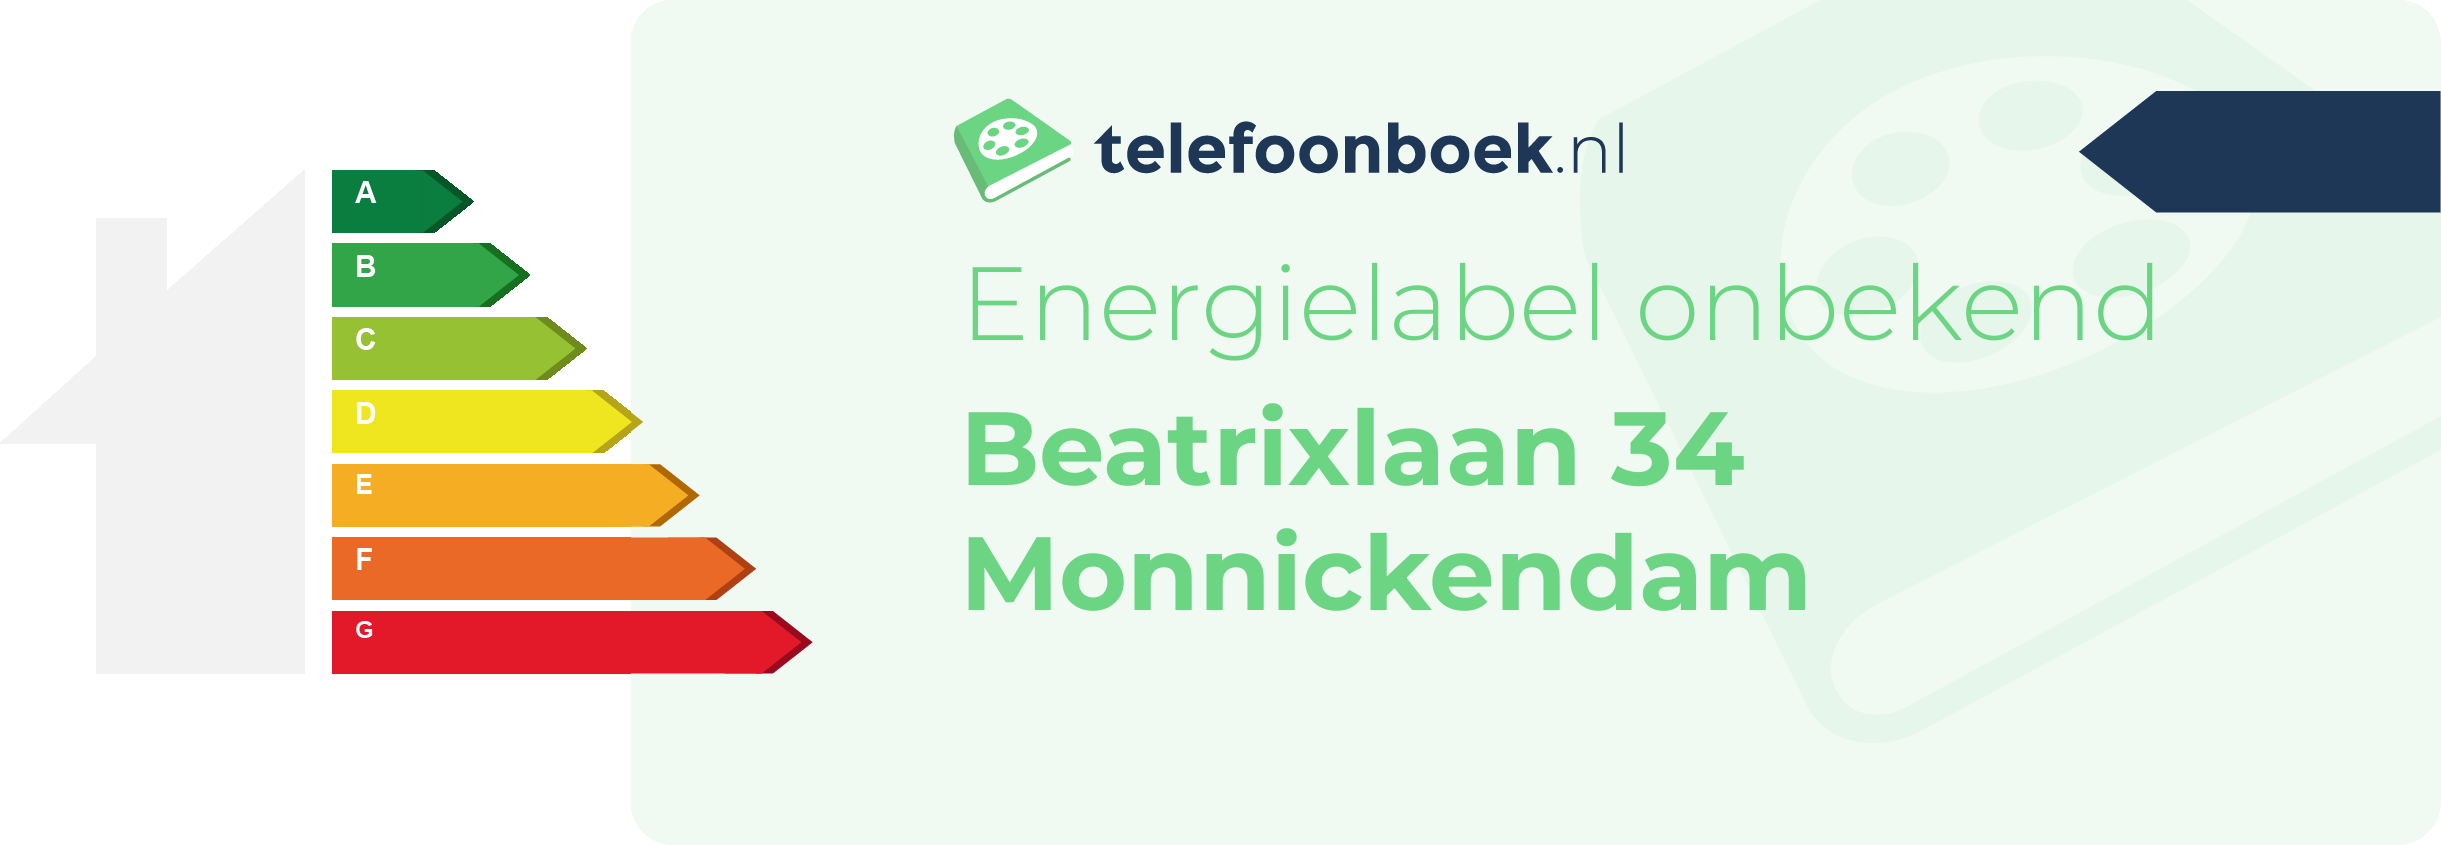 Energielabel Beatrixlaan 34 Monnickendam